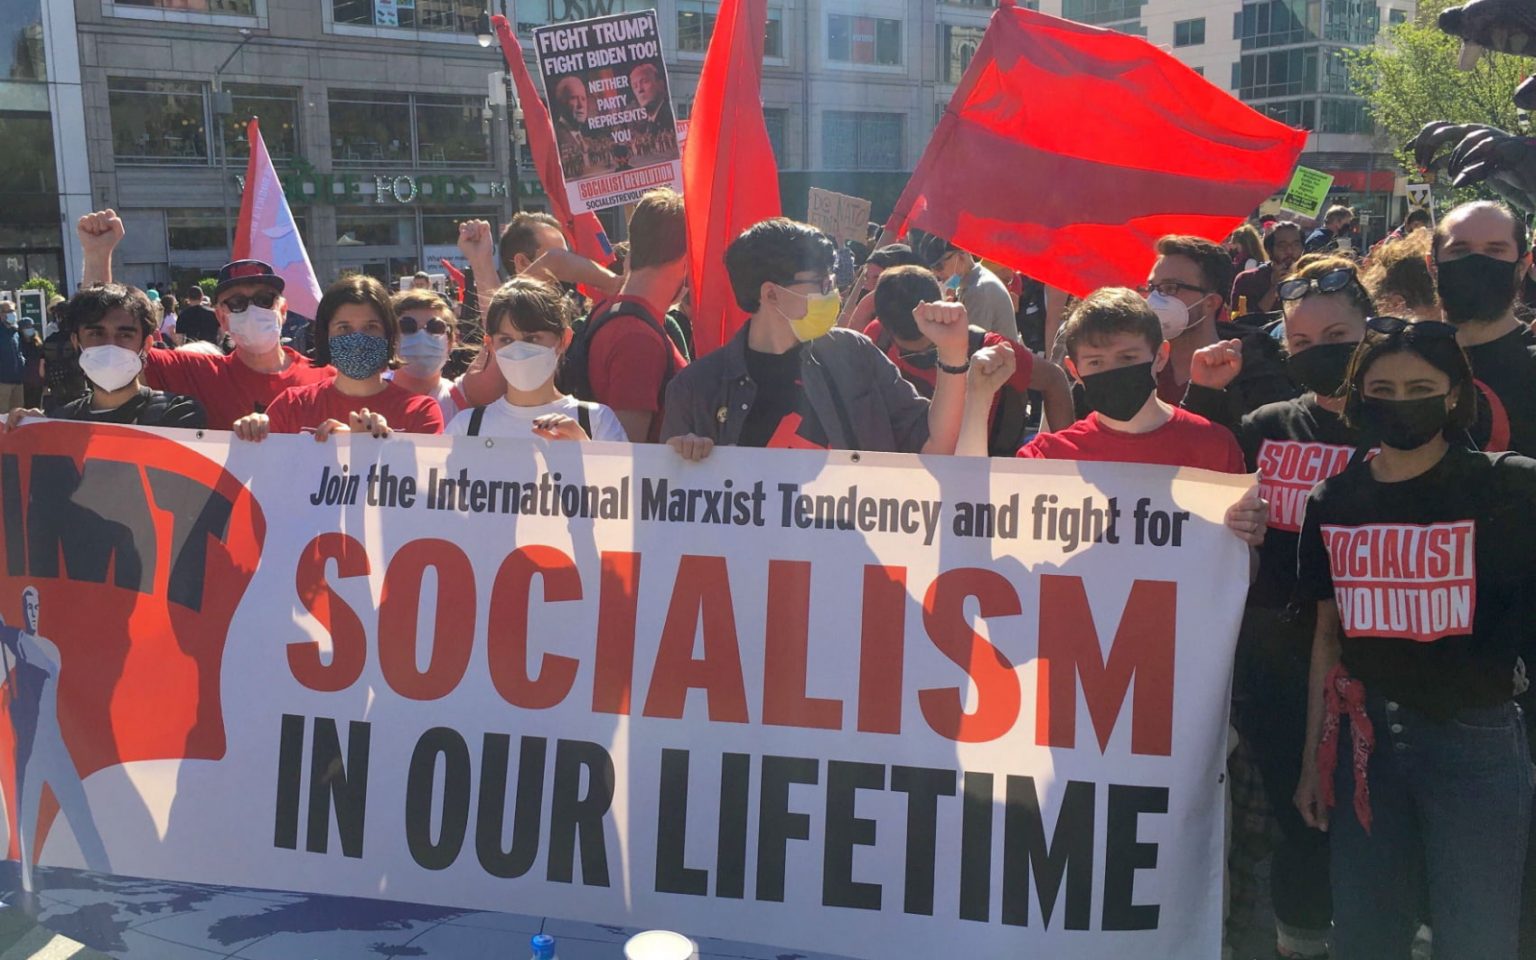 lifetime Image Socialist Revolution